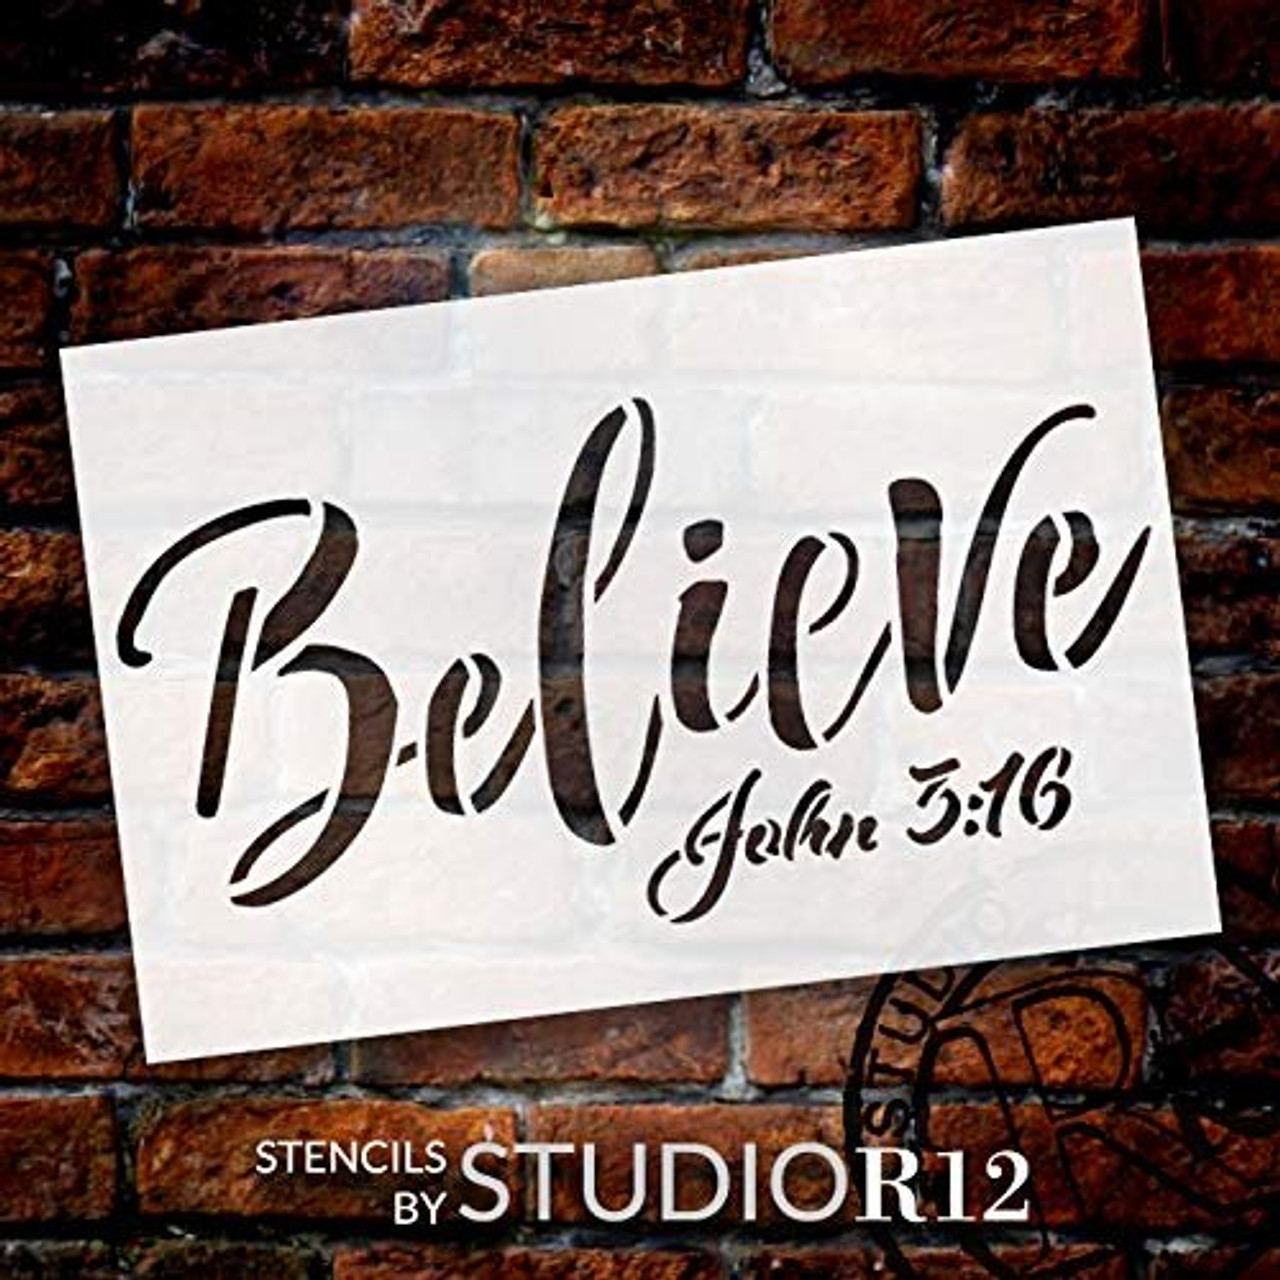 Believe John 3:16 Stencil by StudioR12 | Christian & Inspirational Wall Art | Rustic Farmhouse Faith Decor | Paint Wood Signs | Reusable Mylar Template | DIY Home Crafting | Select Size